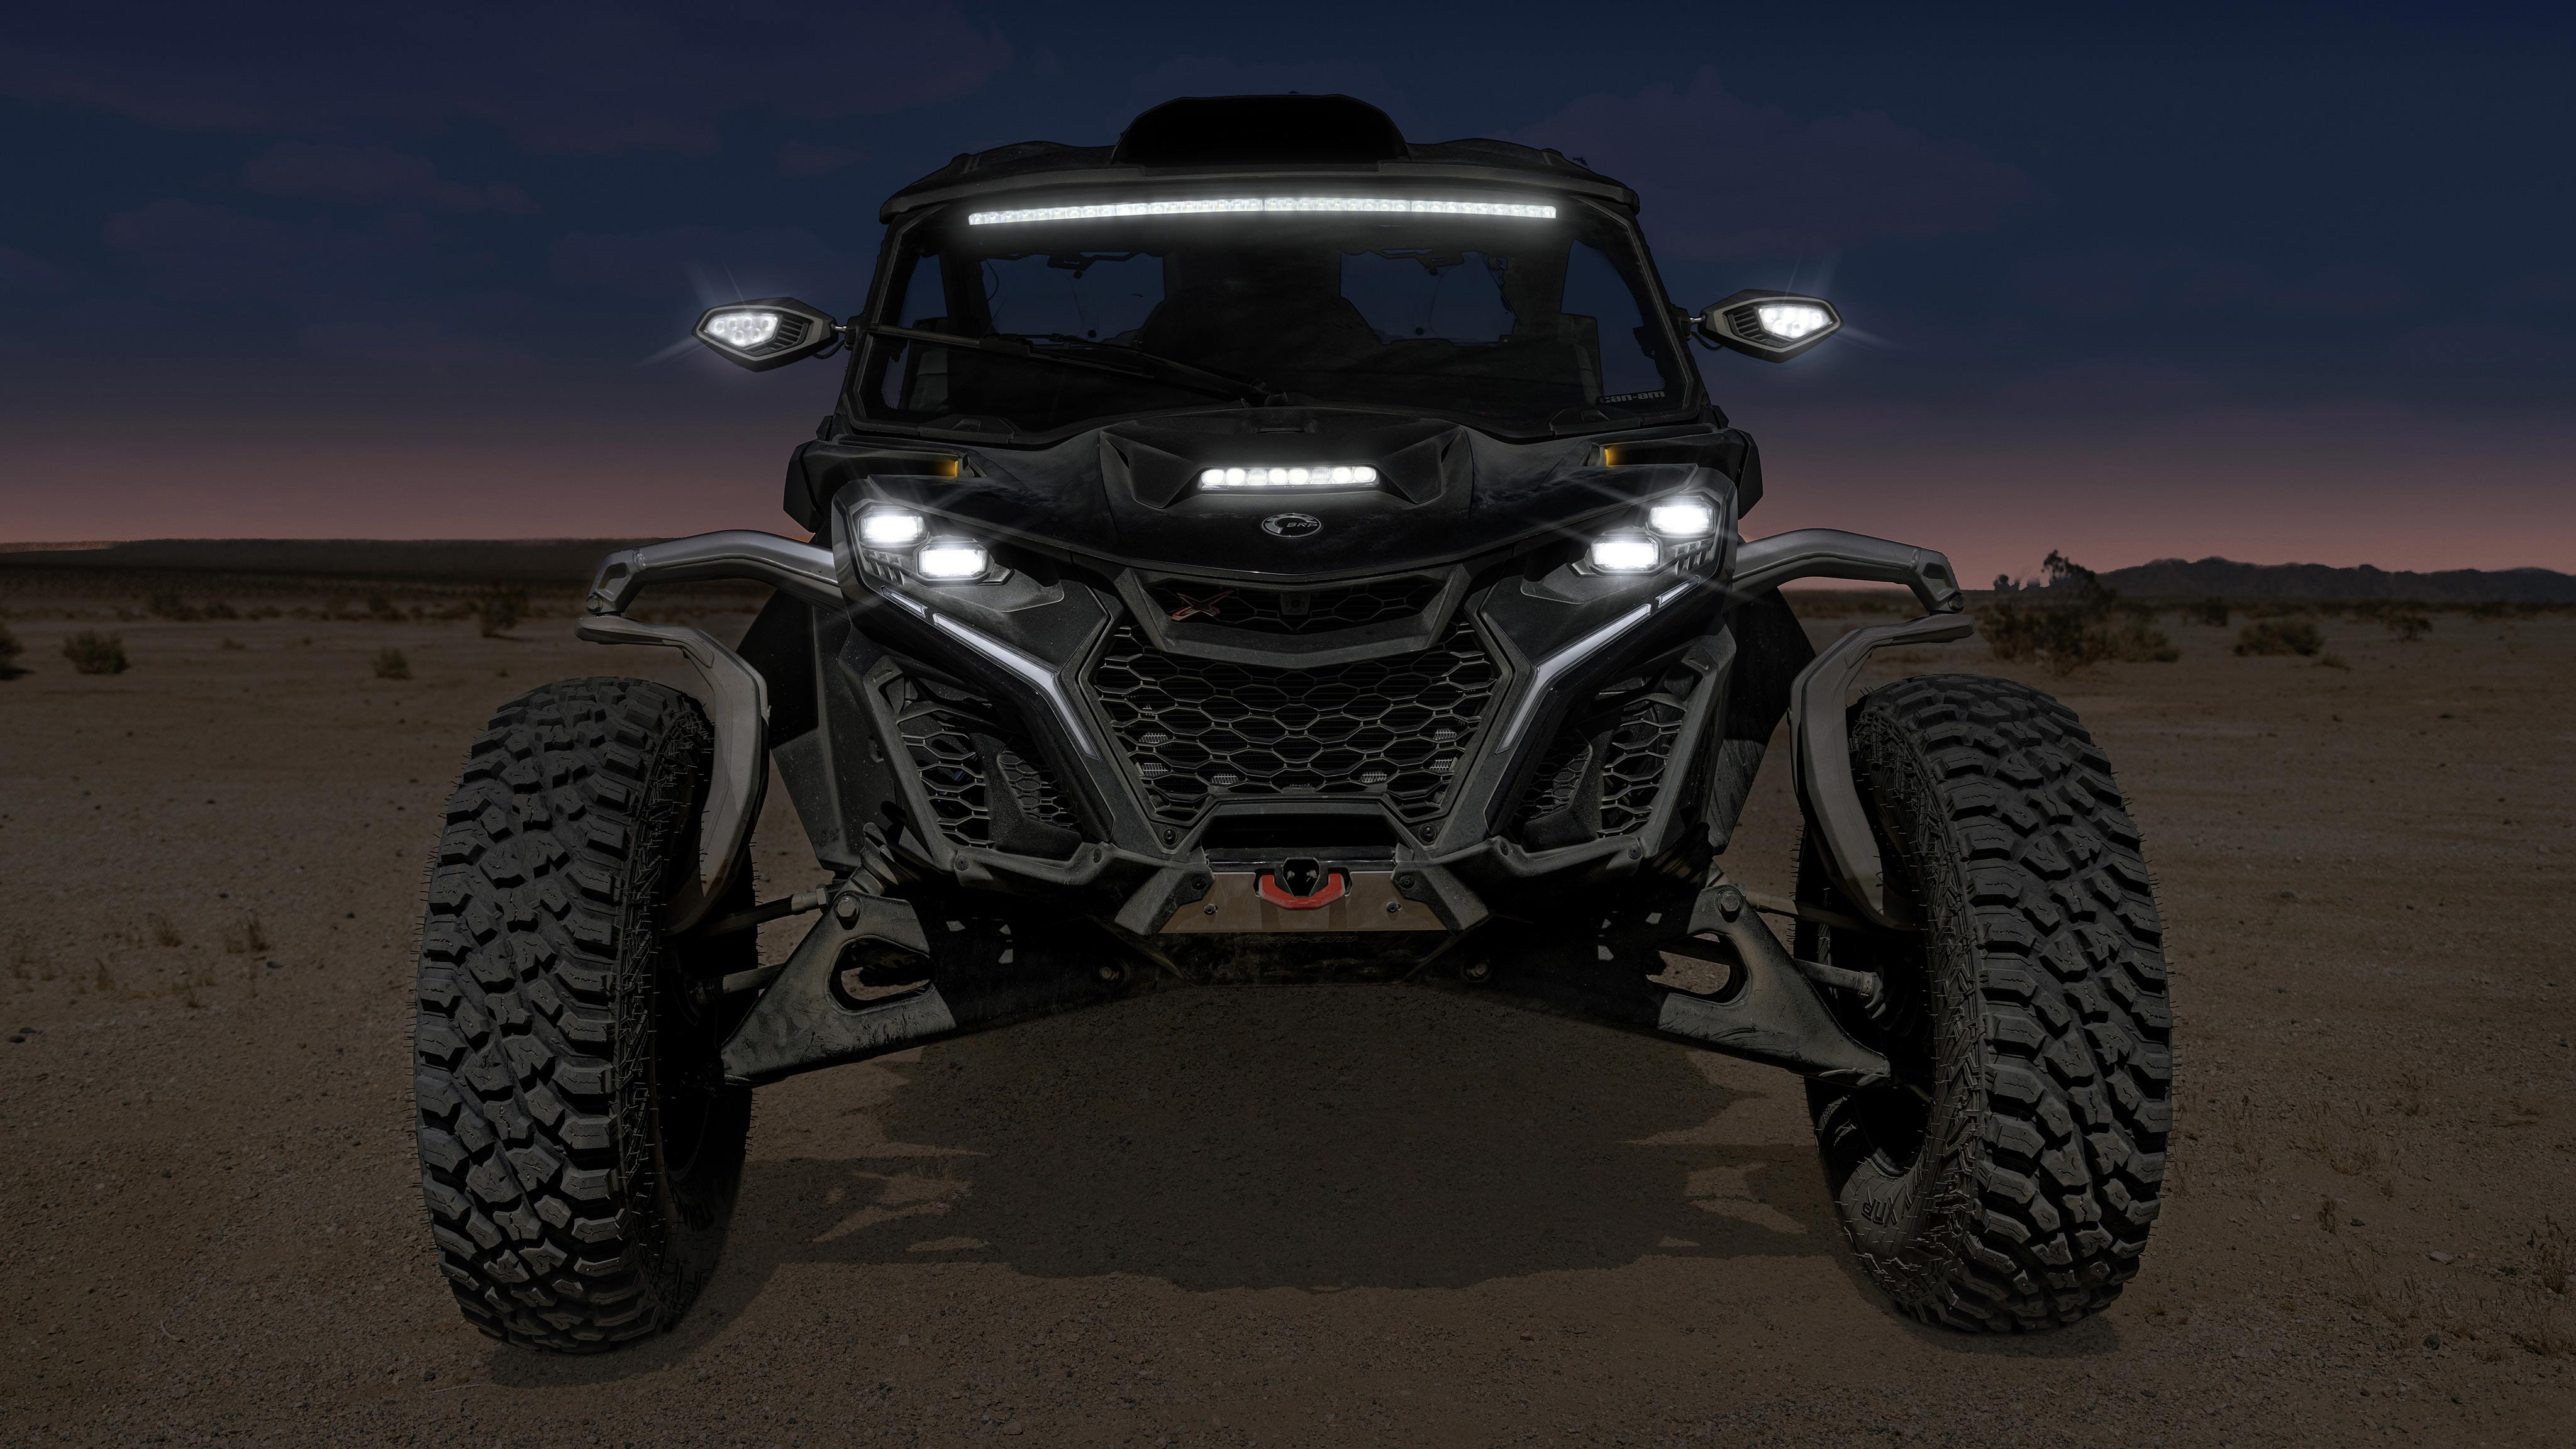 I nuovi veicoli Maverick R SSV nel deserto